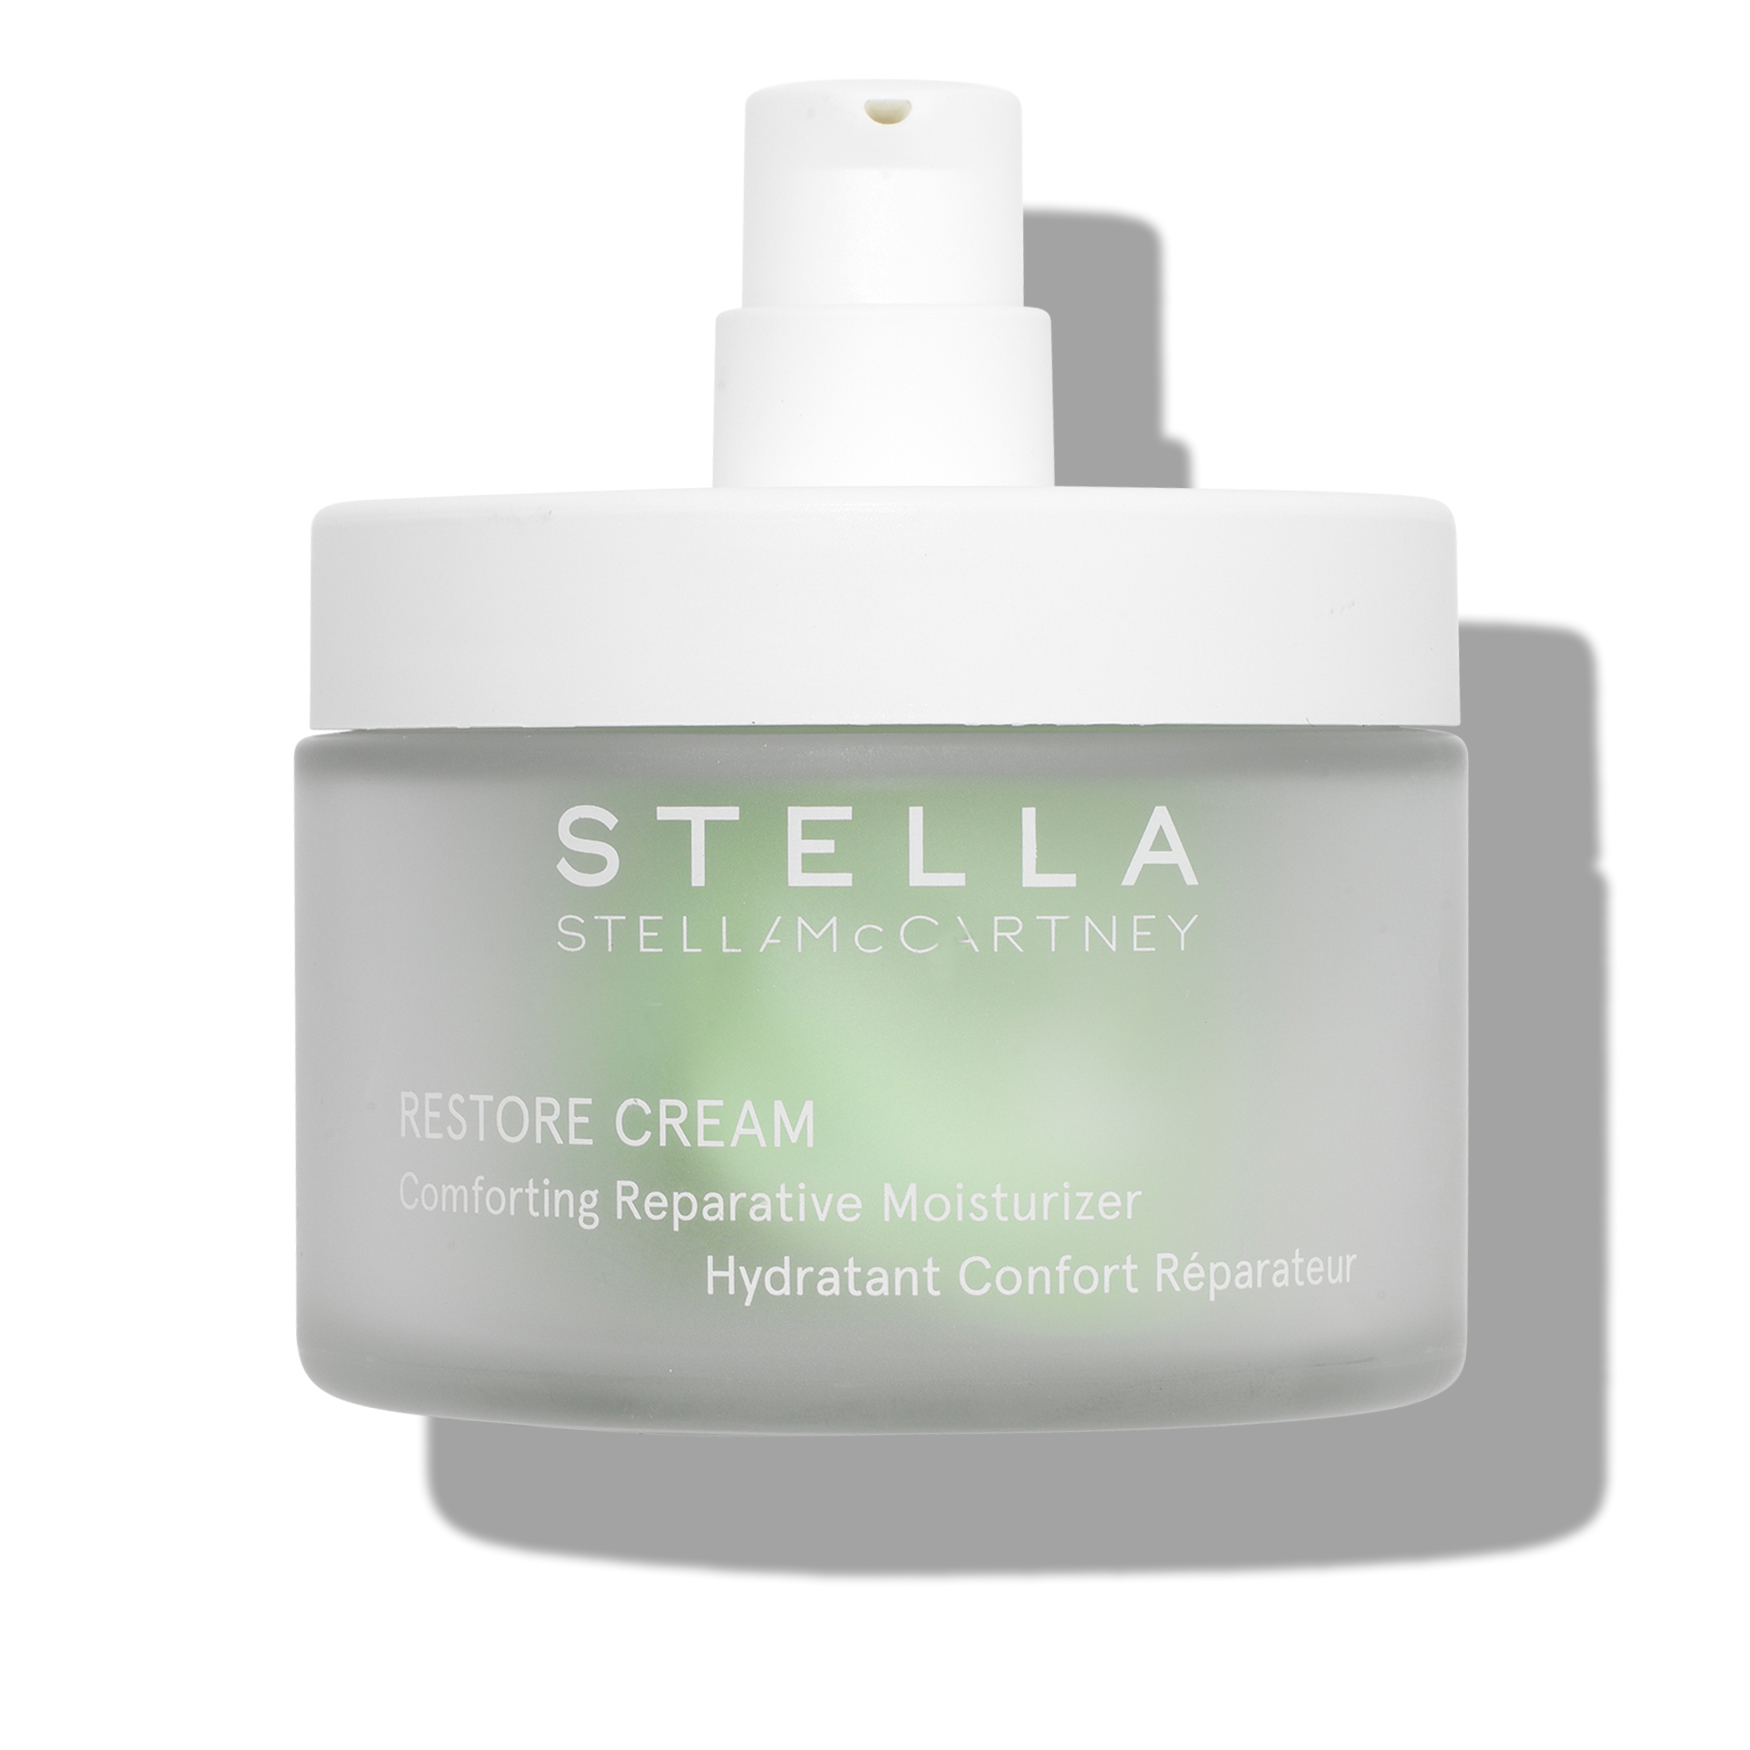 STELLA by Stella McCartney UK - Vegan luxury skincare